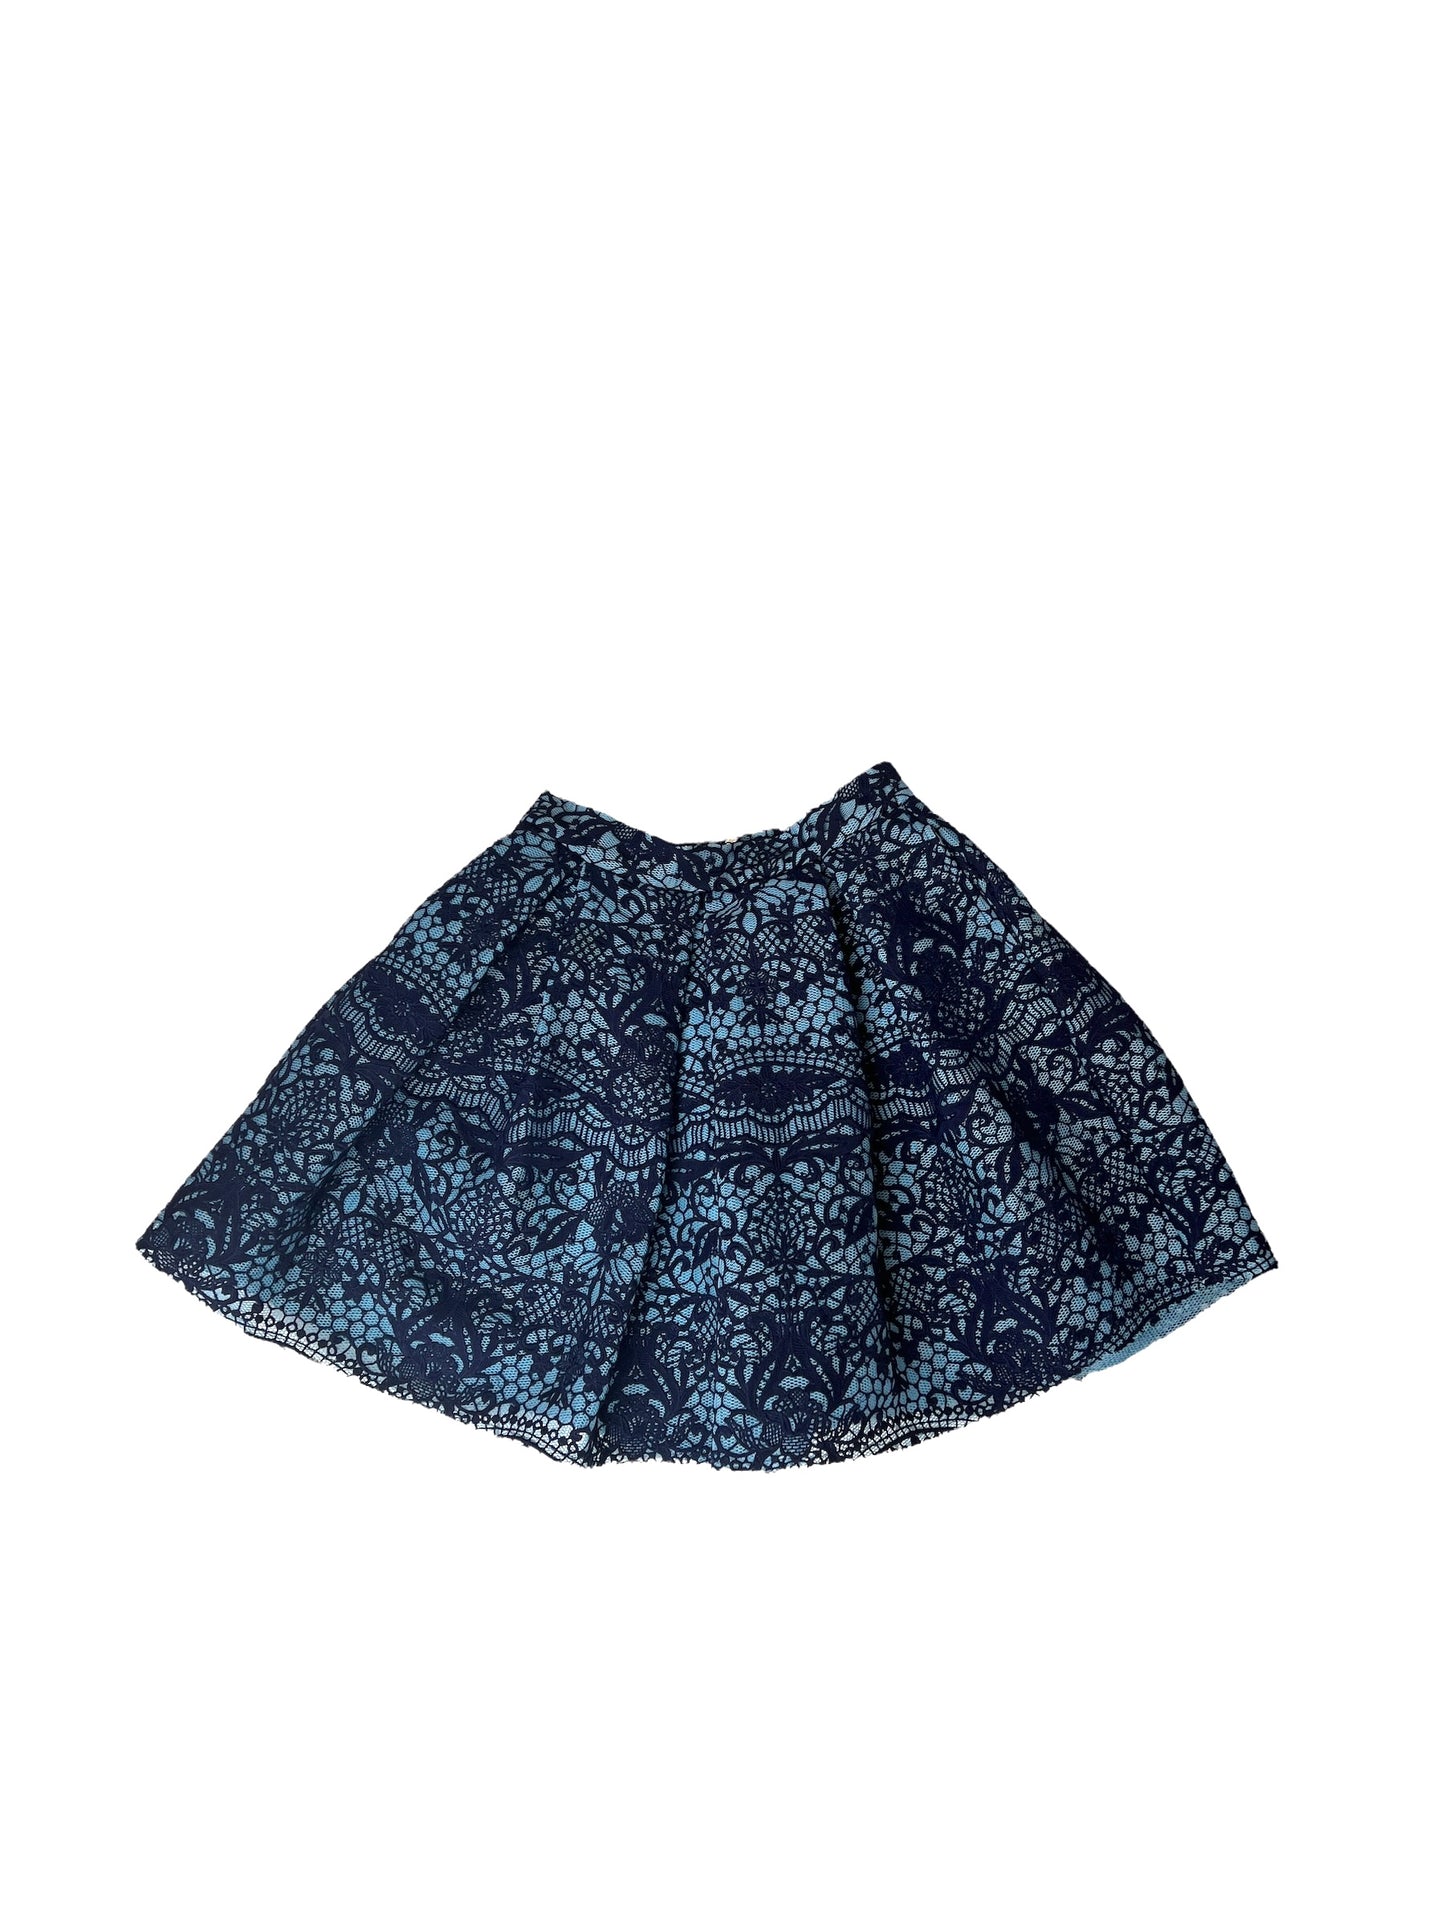 Blue Lace Skirt - 3